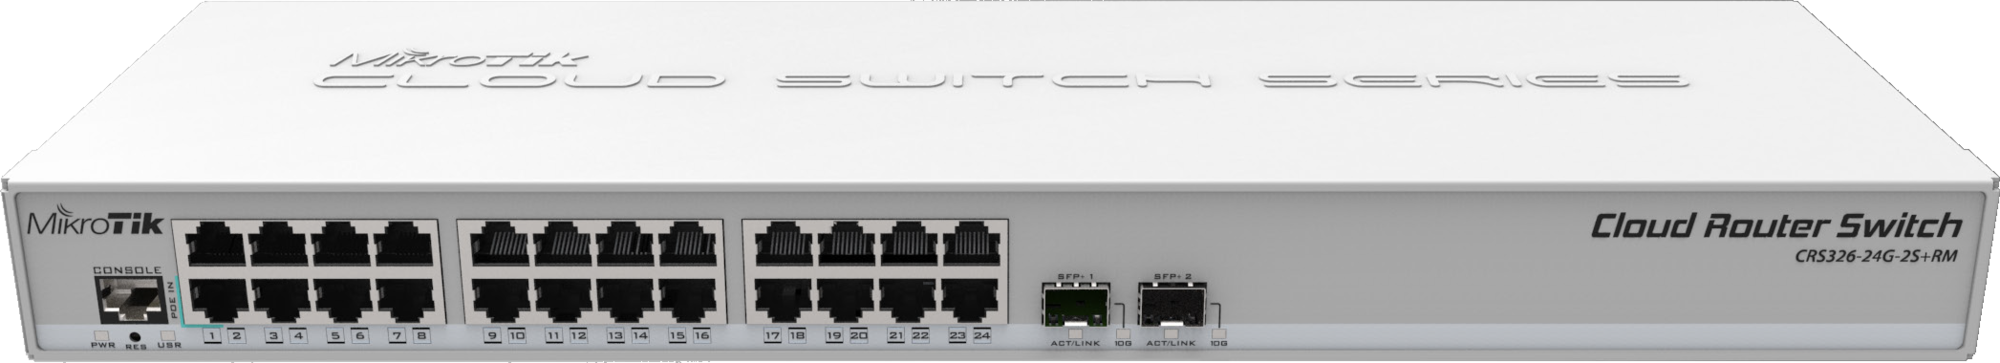 Коммутатор MikroTik MikroTik Cloud Router Switch CRS326-24G-2S+RM /Управляемый Layer 2